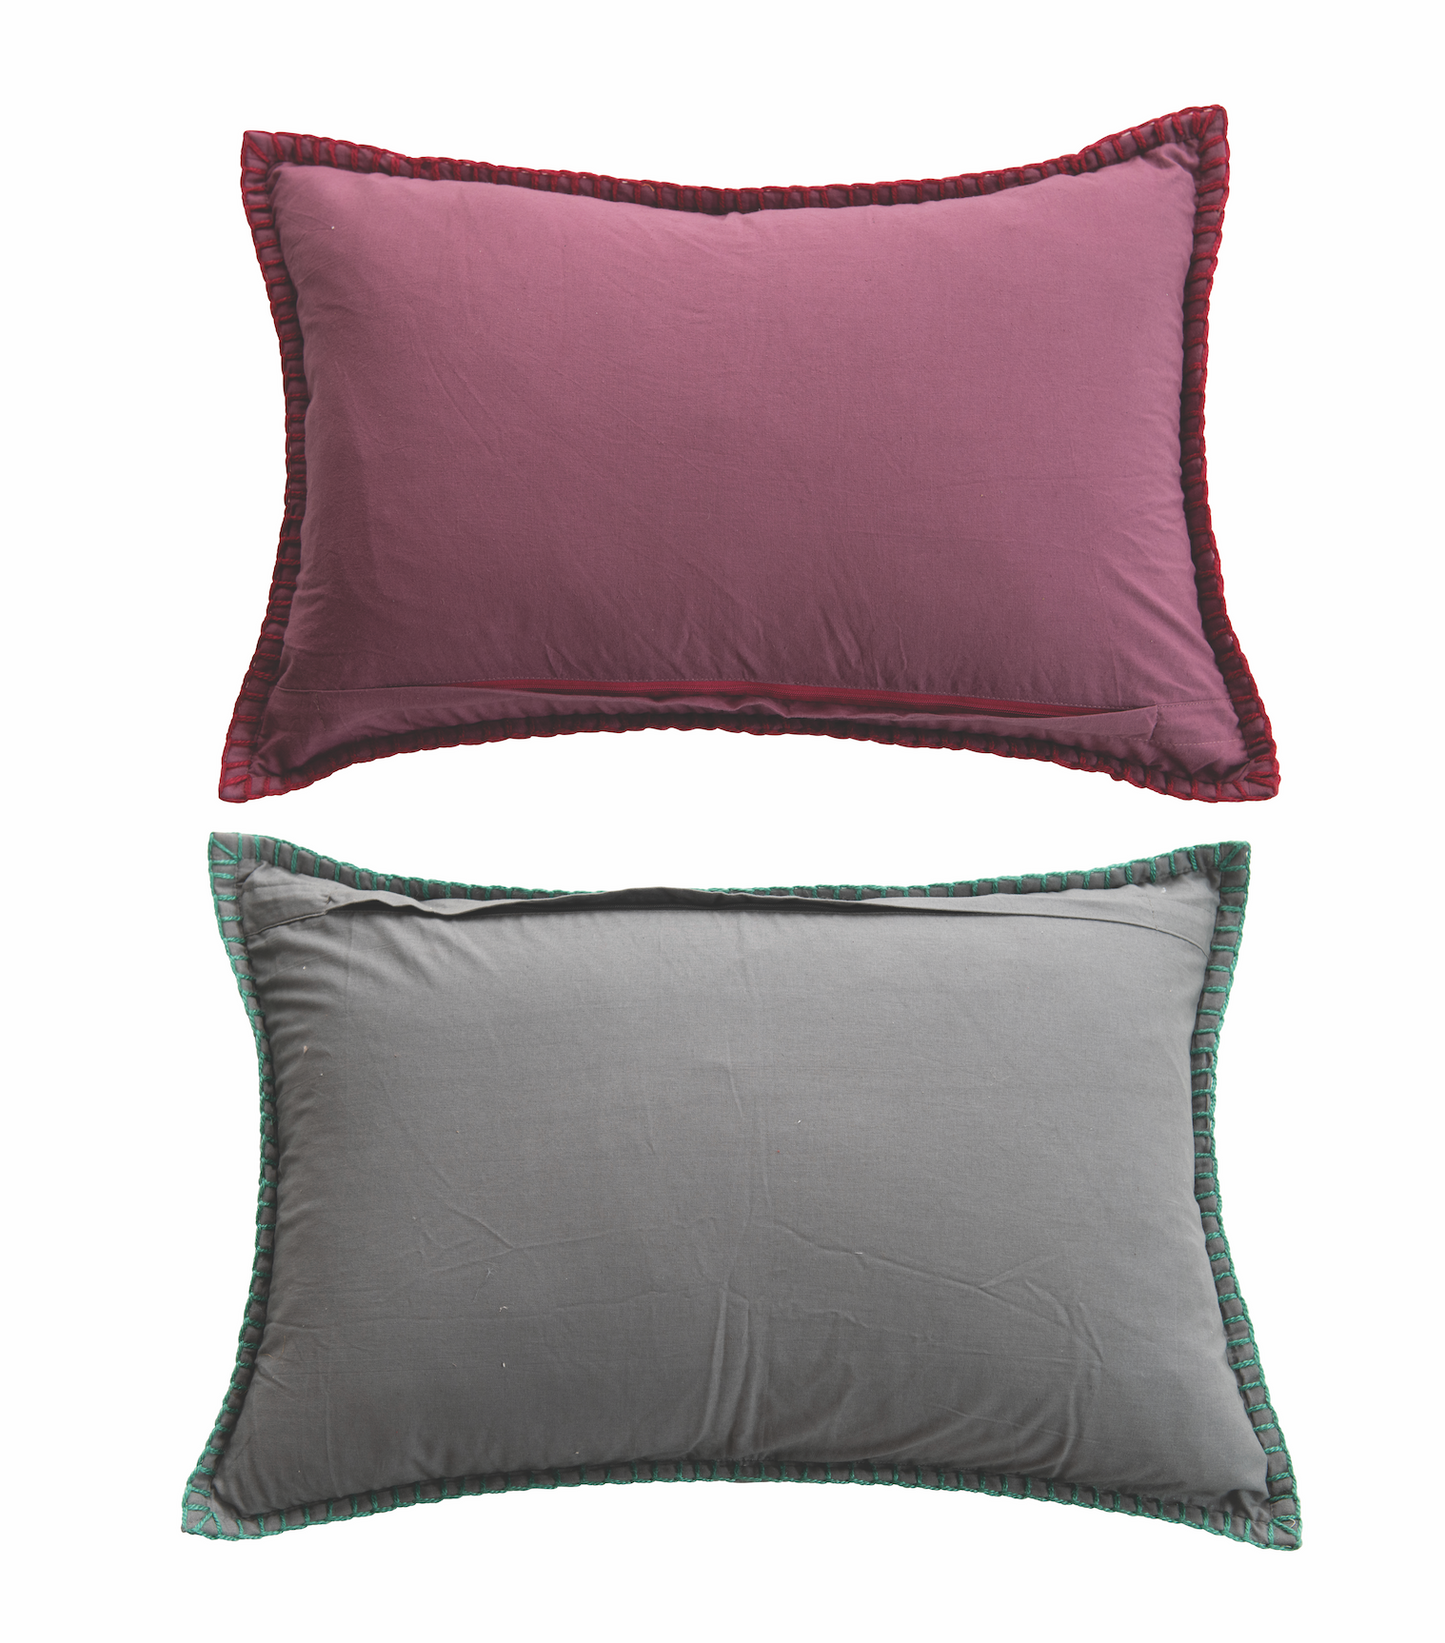 24"L x 16"H Cotton Velvet Kantha Stitch Pillow